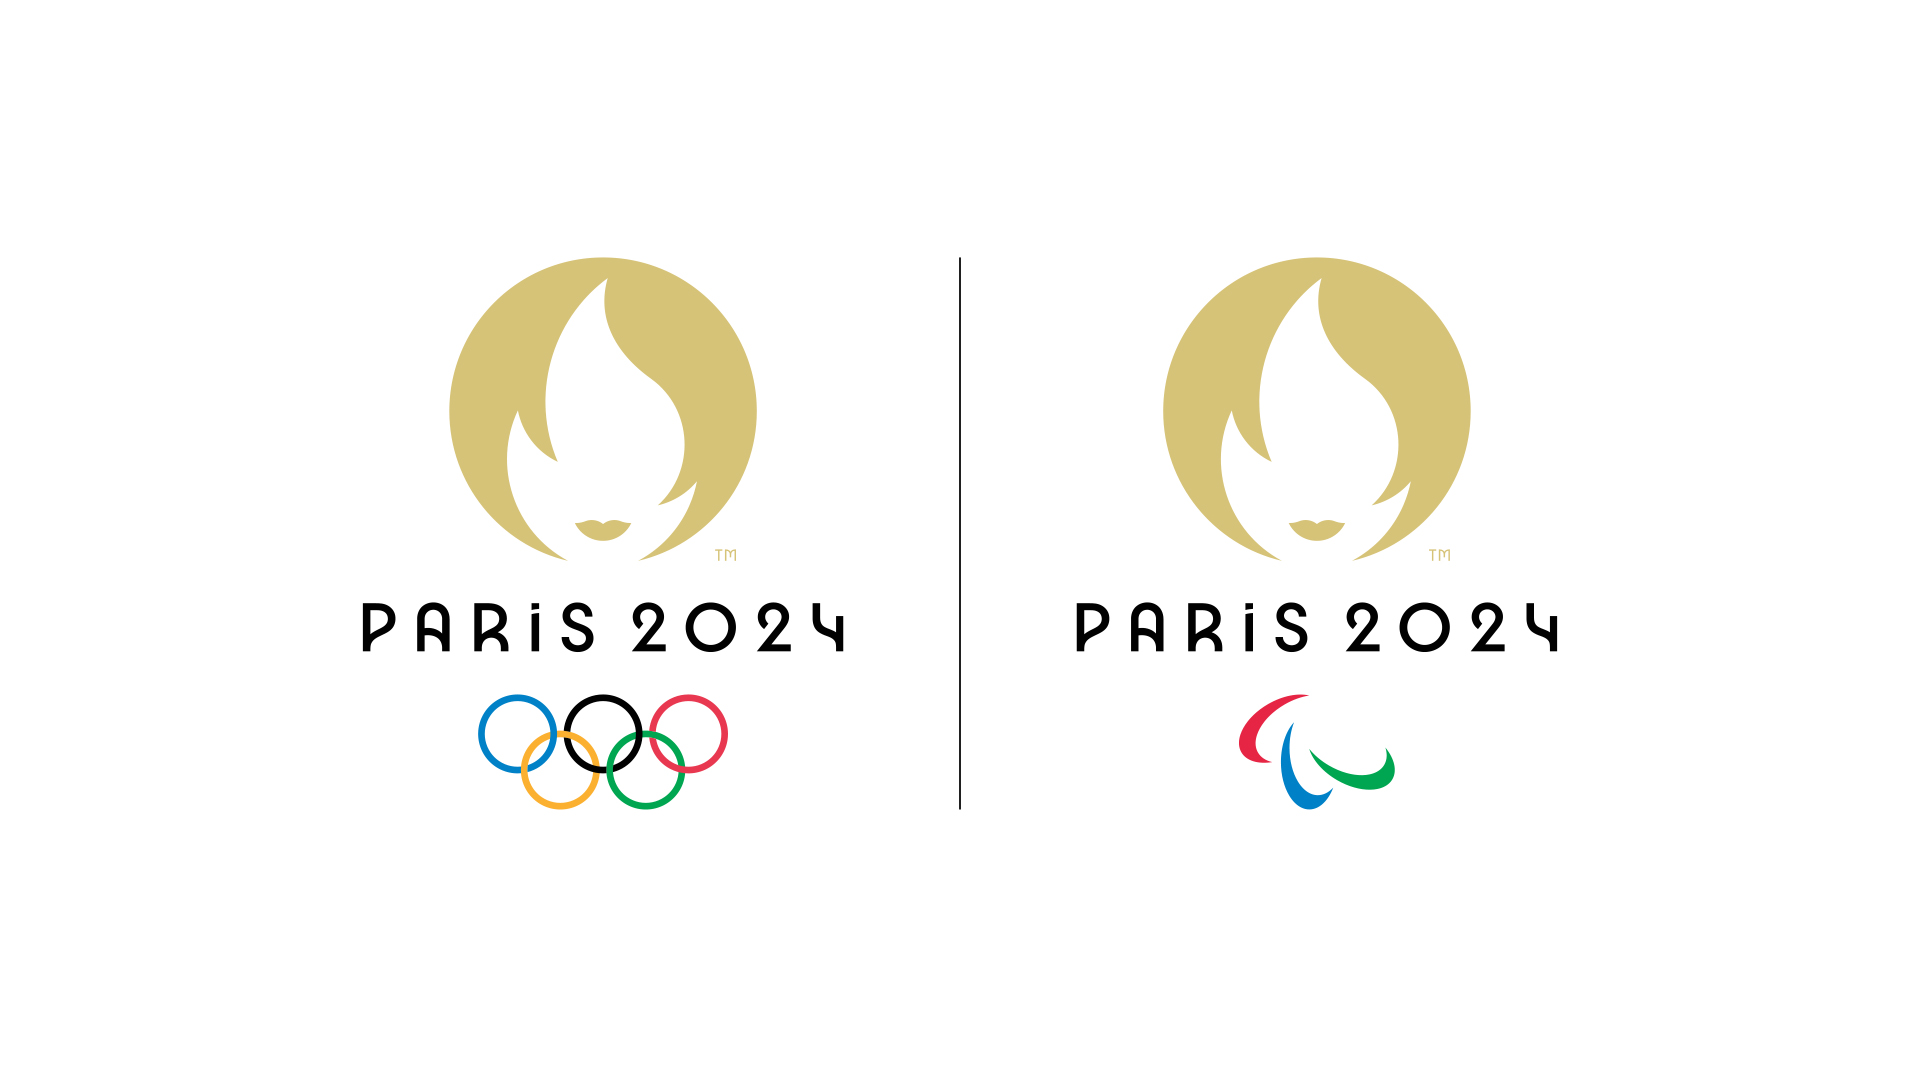 Париж 2024, логотип Олимпиады 2024, Логотип, Айдентика